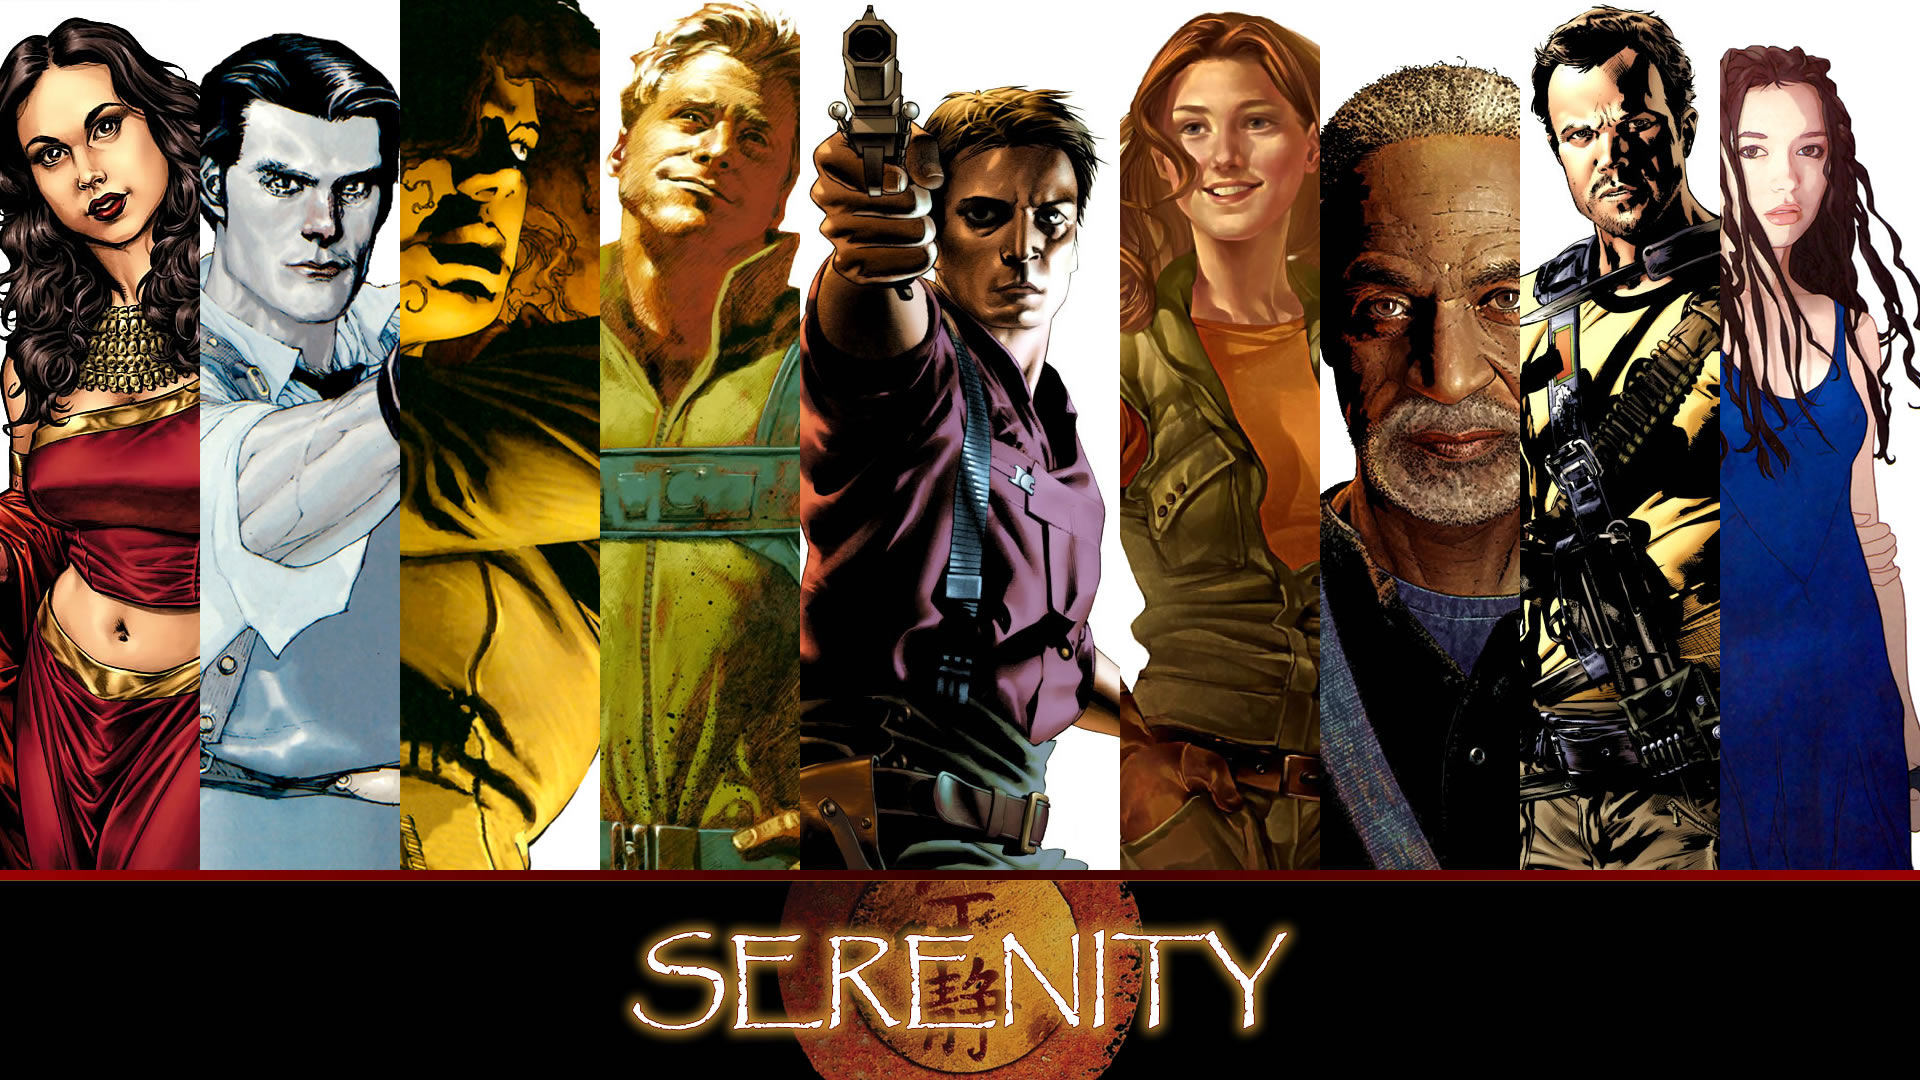 Serenity Firefly Sci Fi Poster Wallpaper